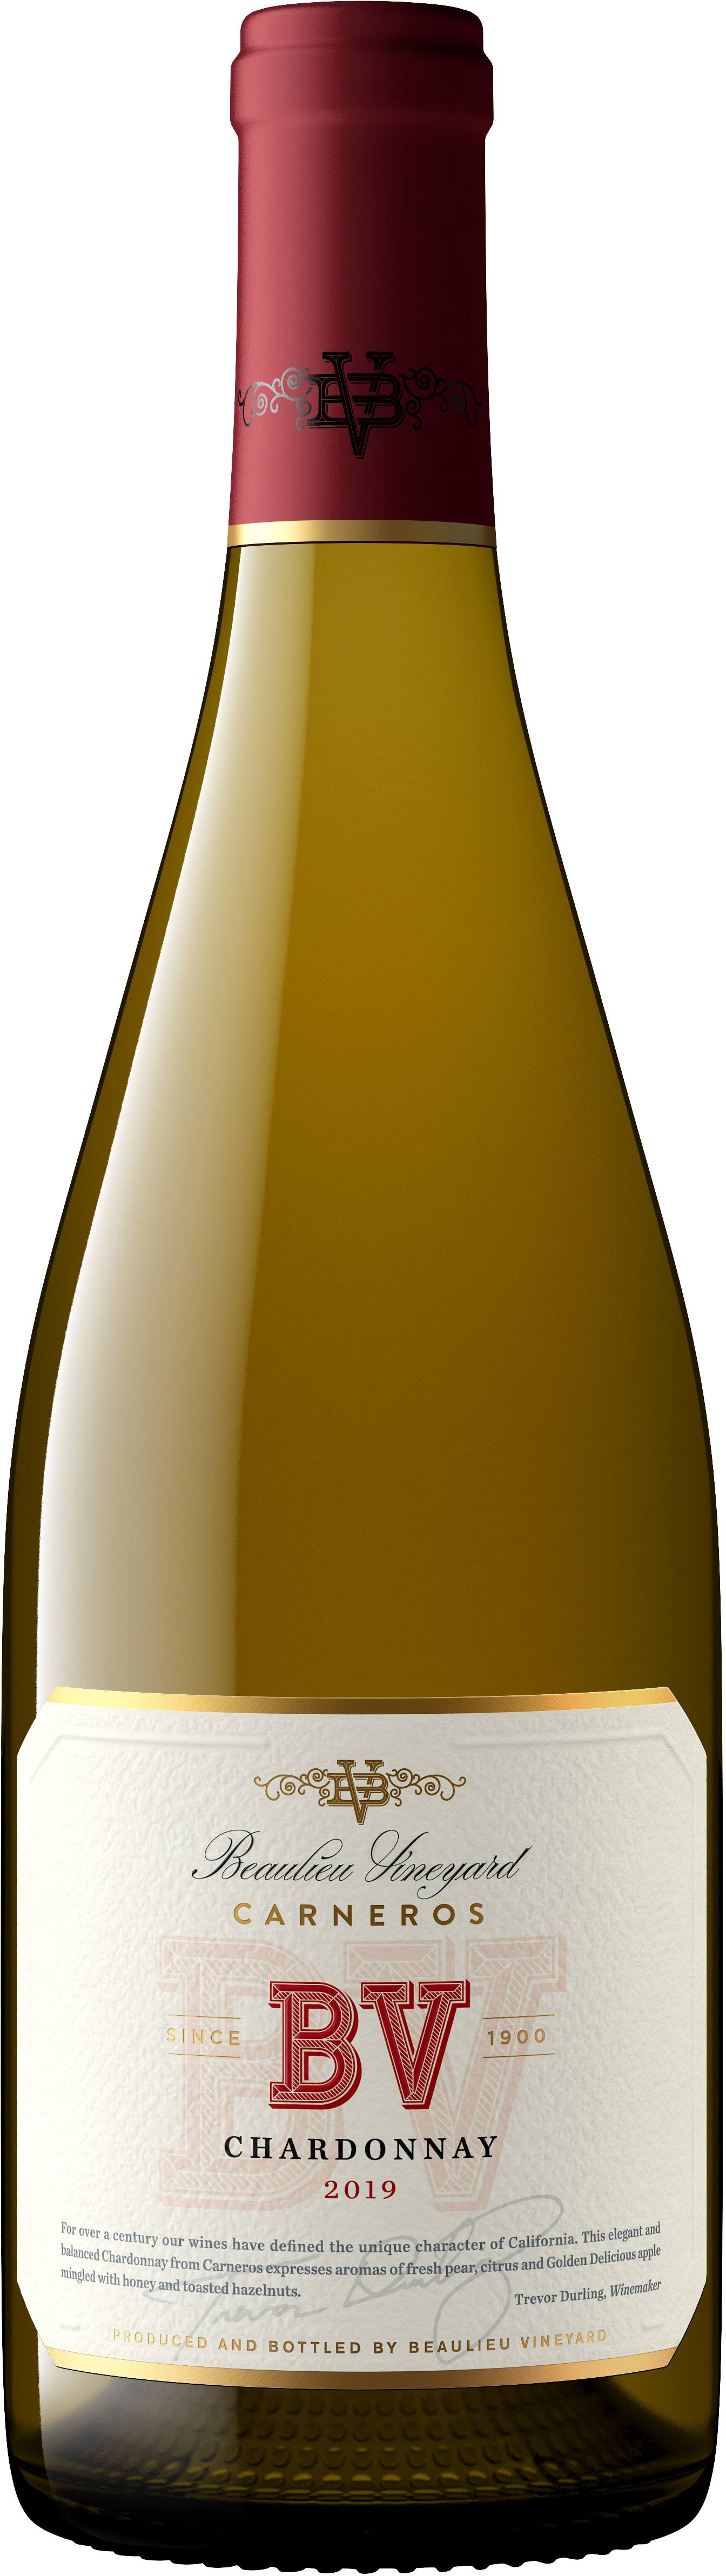 Beaulieu Vineyard BV Chardonnay, Carneros, Napa Valley, 2005 - 750 ml